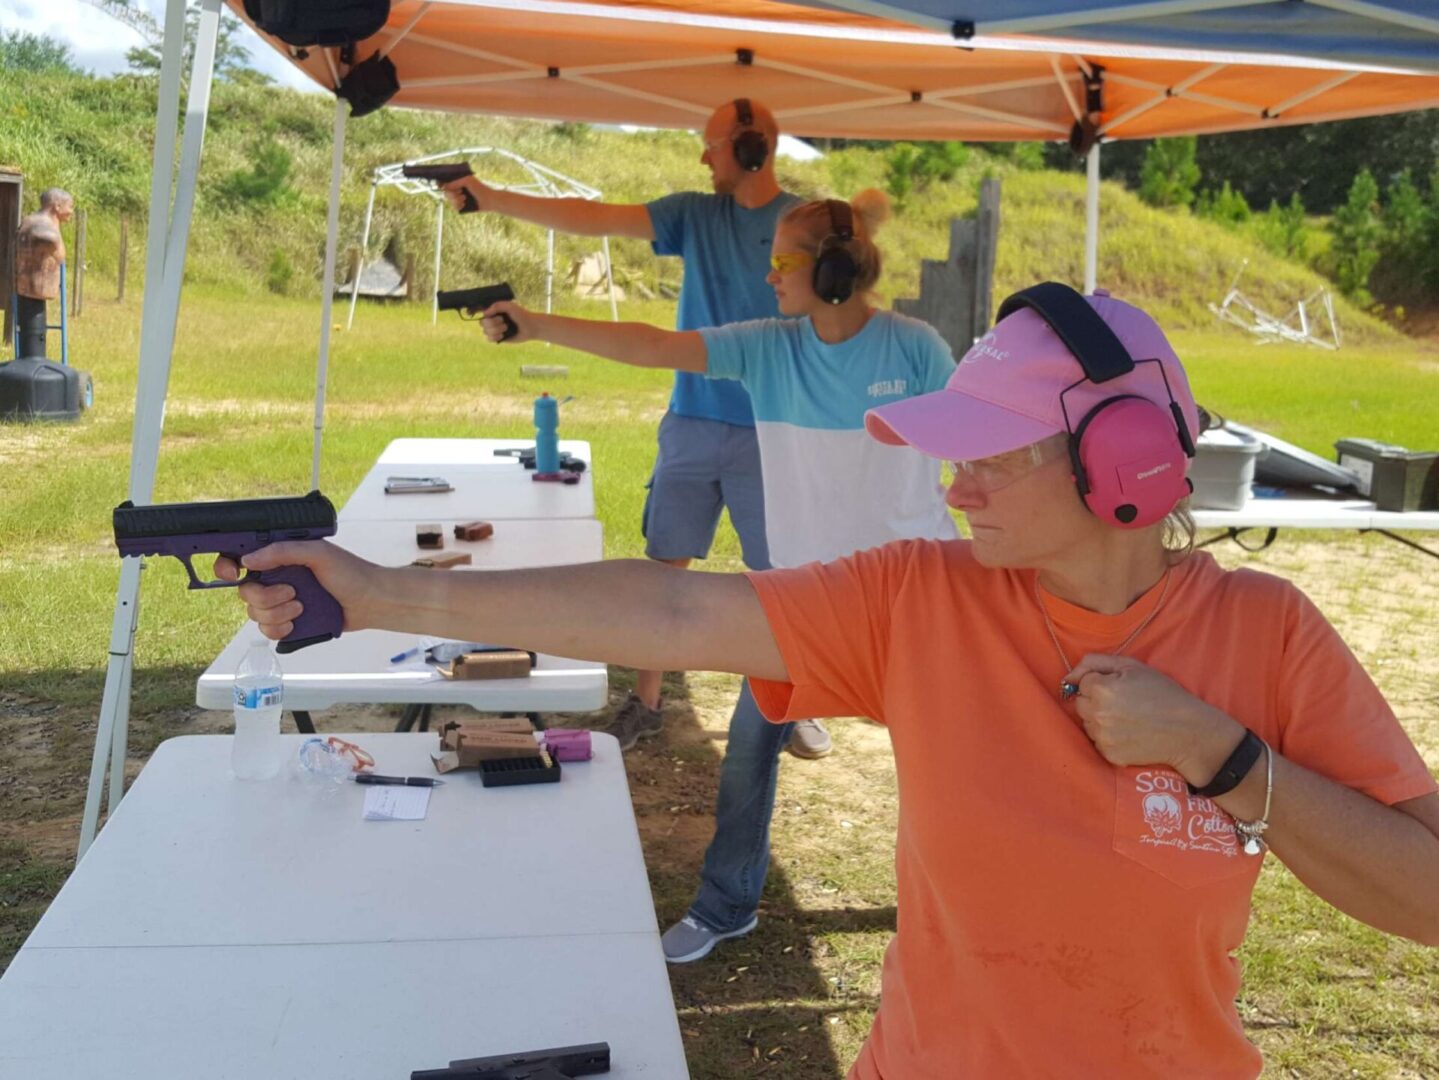 A woman wearing an orange T-shirt practicing handgun